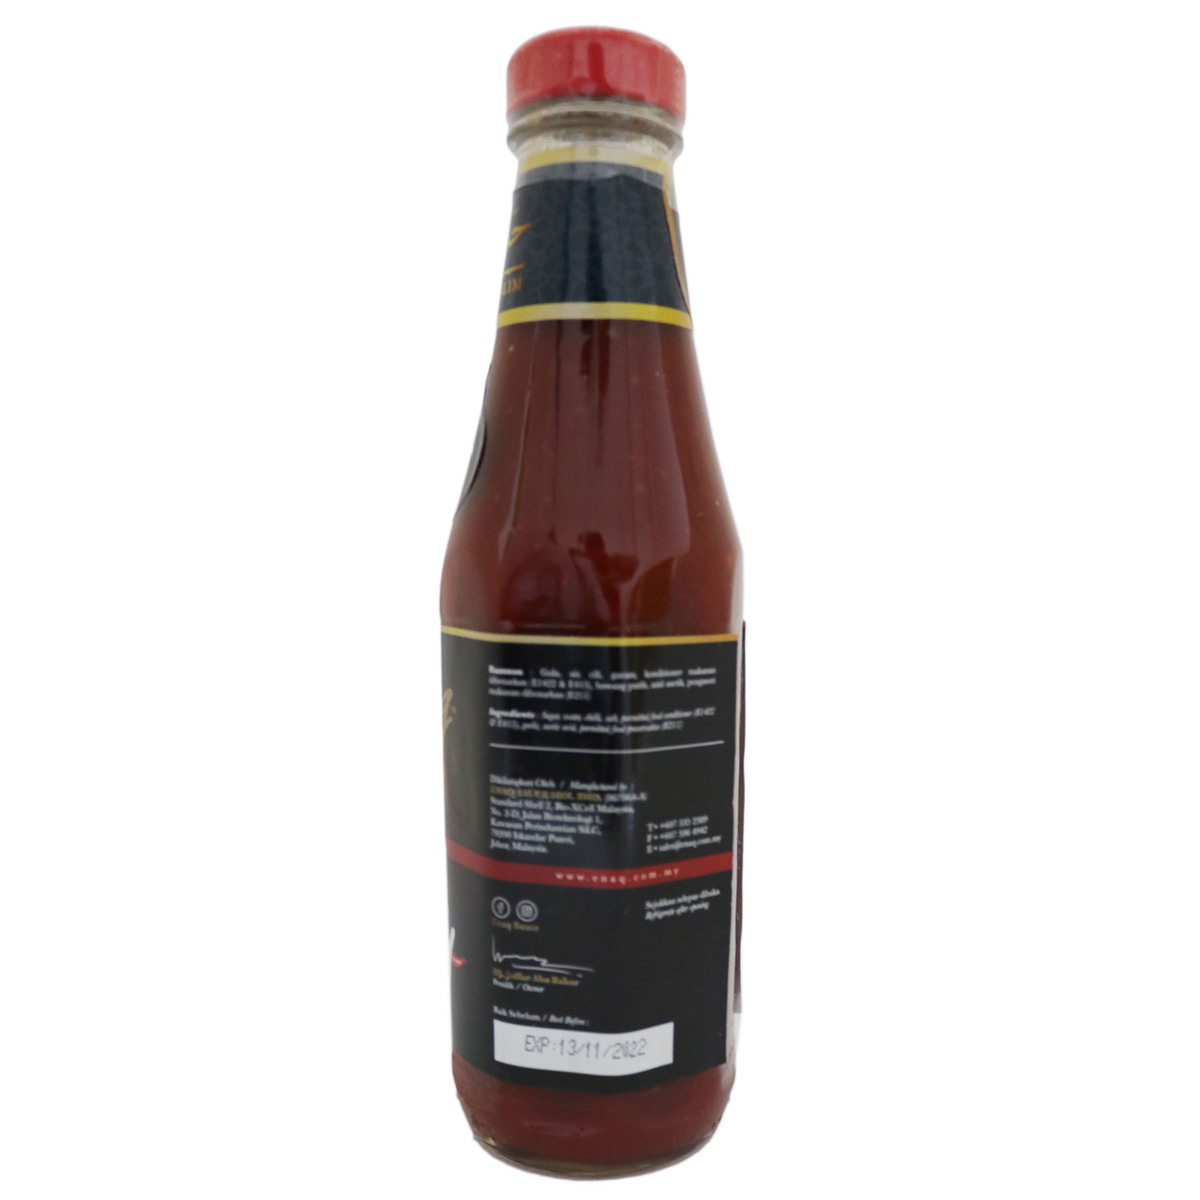 Enaq Chilli Sauce 340g